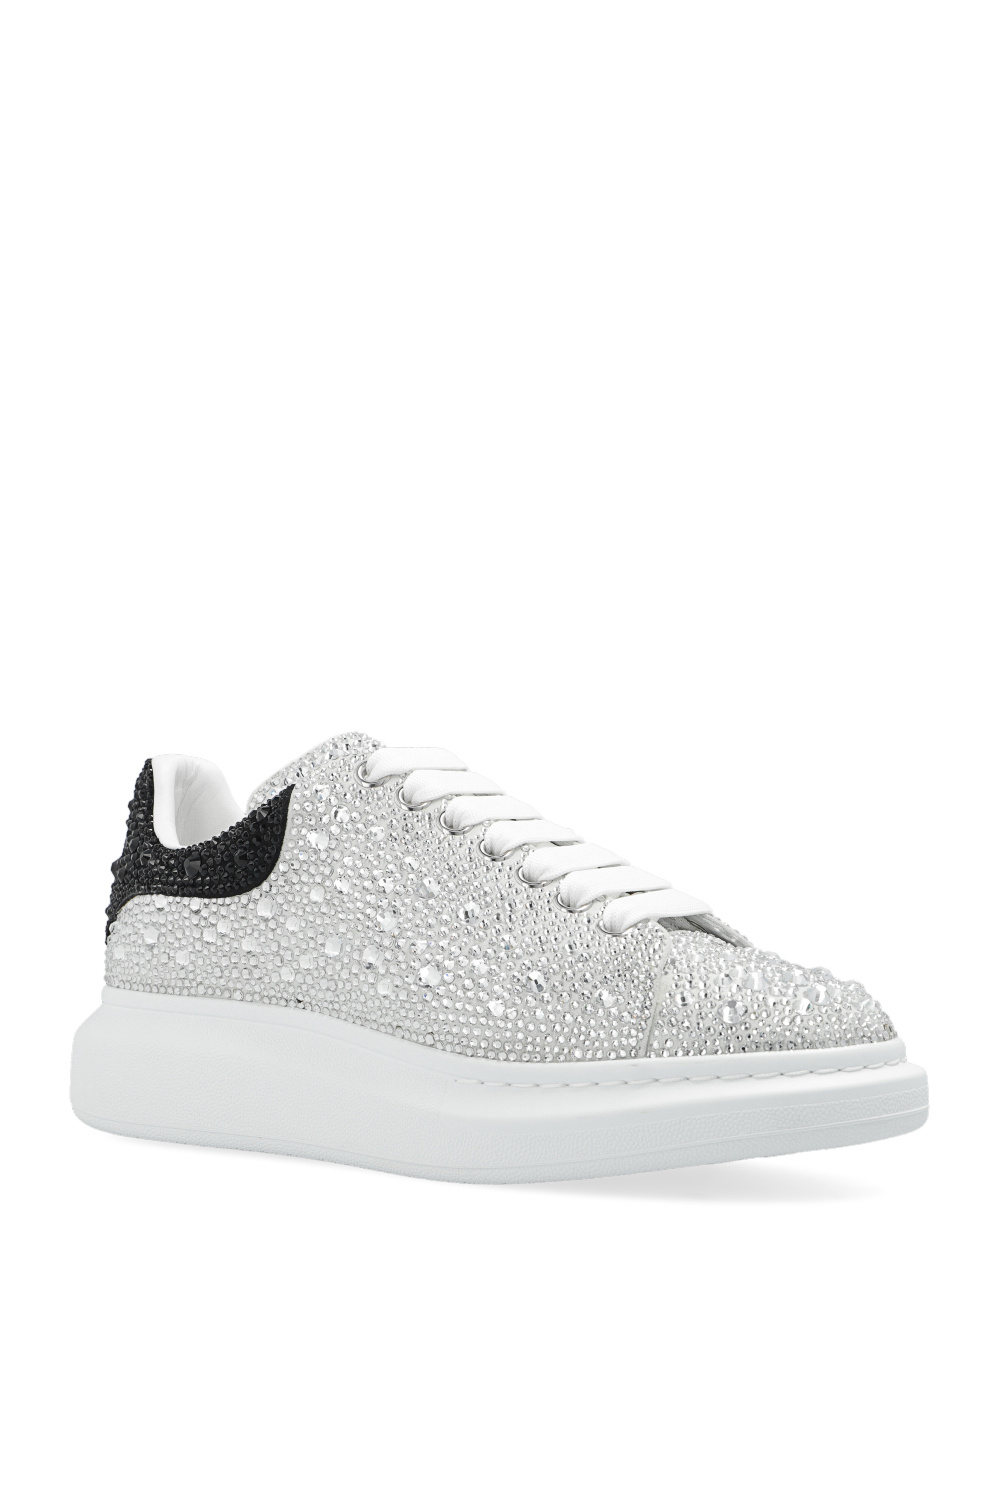 White Crystal-embellished sneakers Alexander McQueen - Vitkac GB